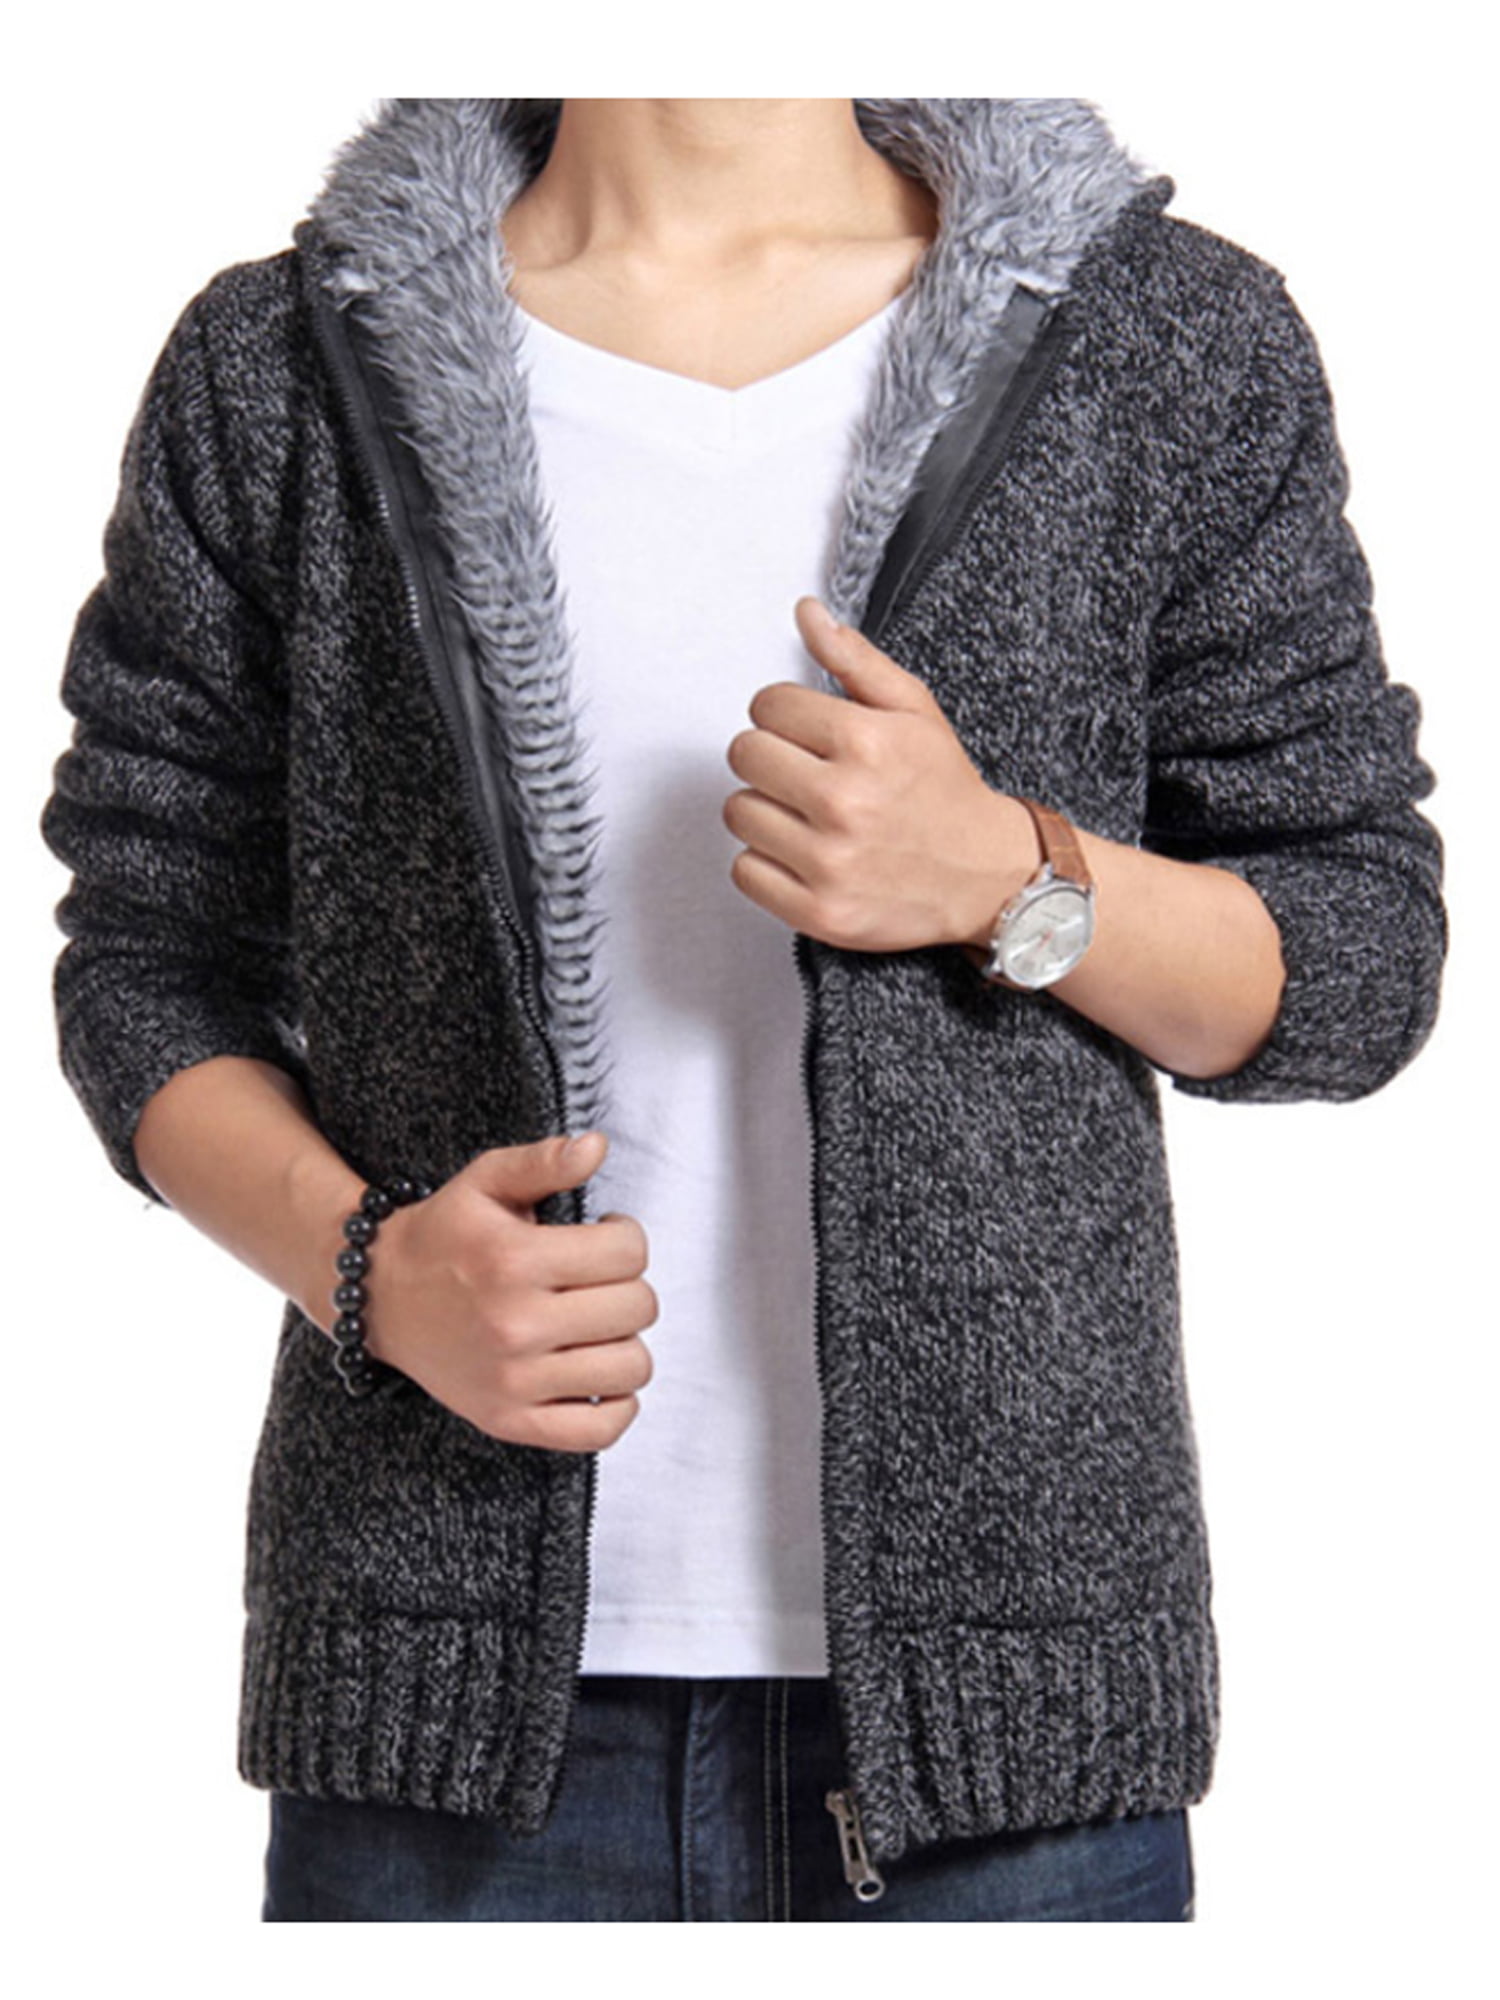 Men's Fleece Lined Winter Knitted Hooded Cardigan Sweater Casual Coat ...